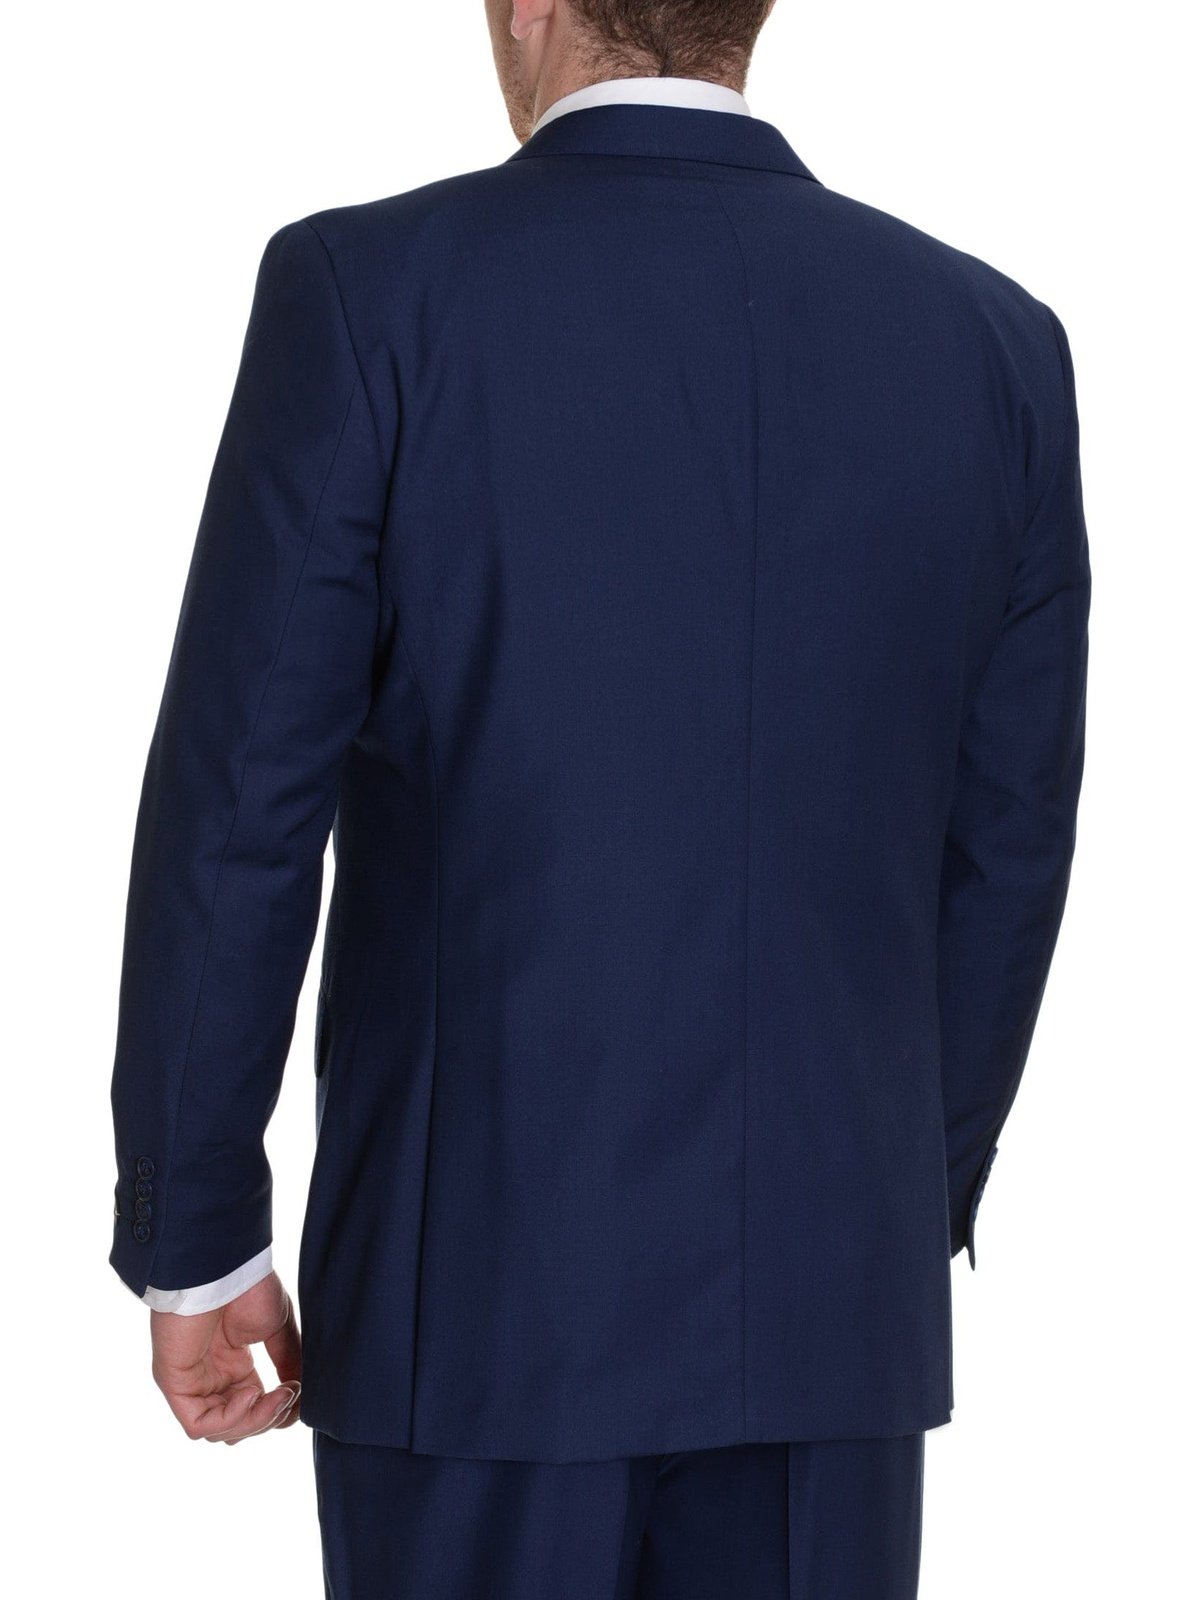 Raphael TWO PIECE SUITS Raphael Solid Blue Suit With Peak Lapels And Ticket Pocket